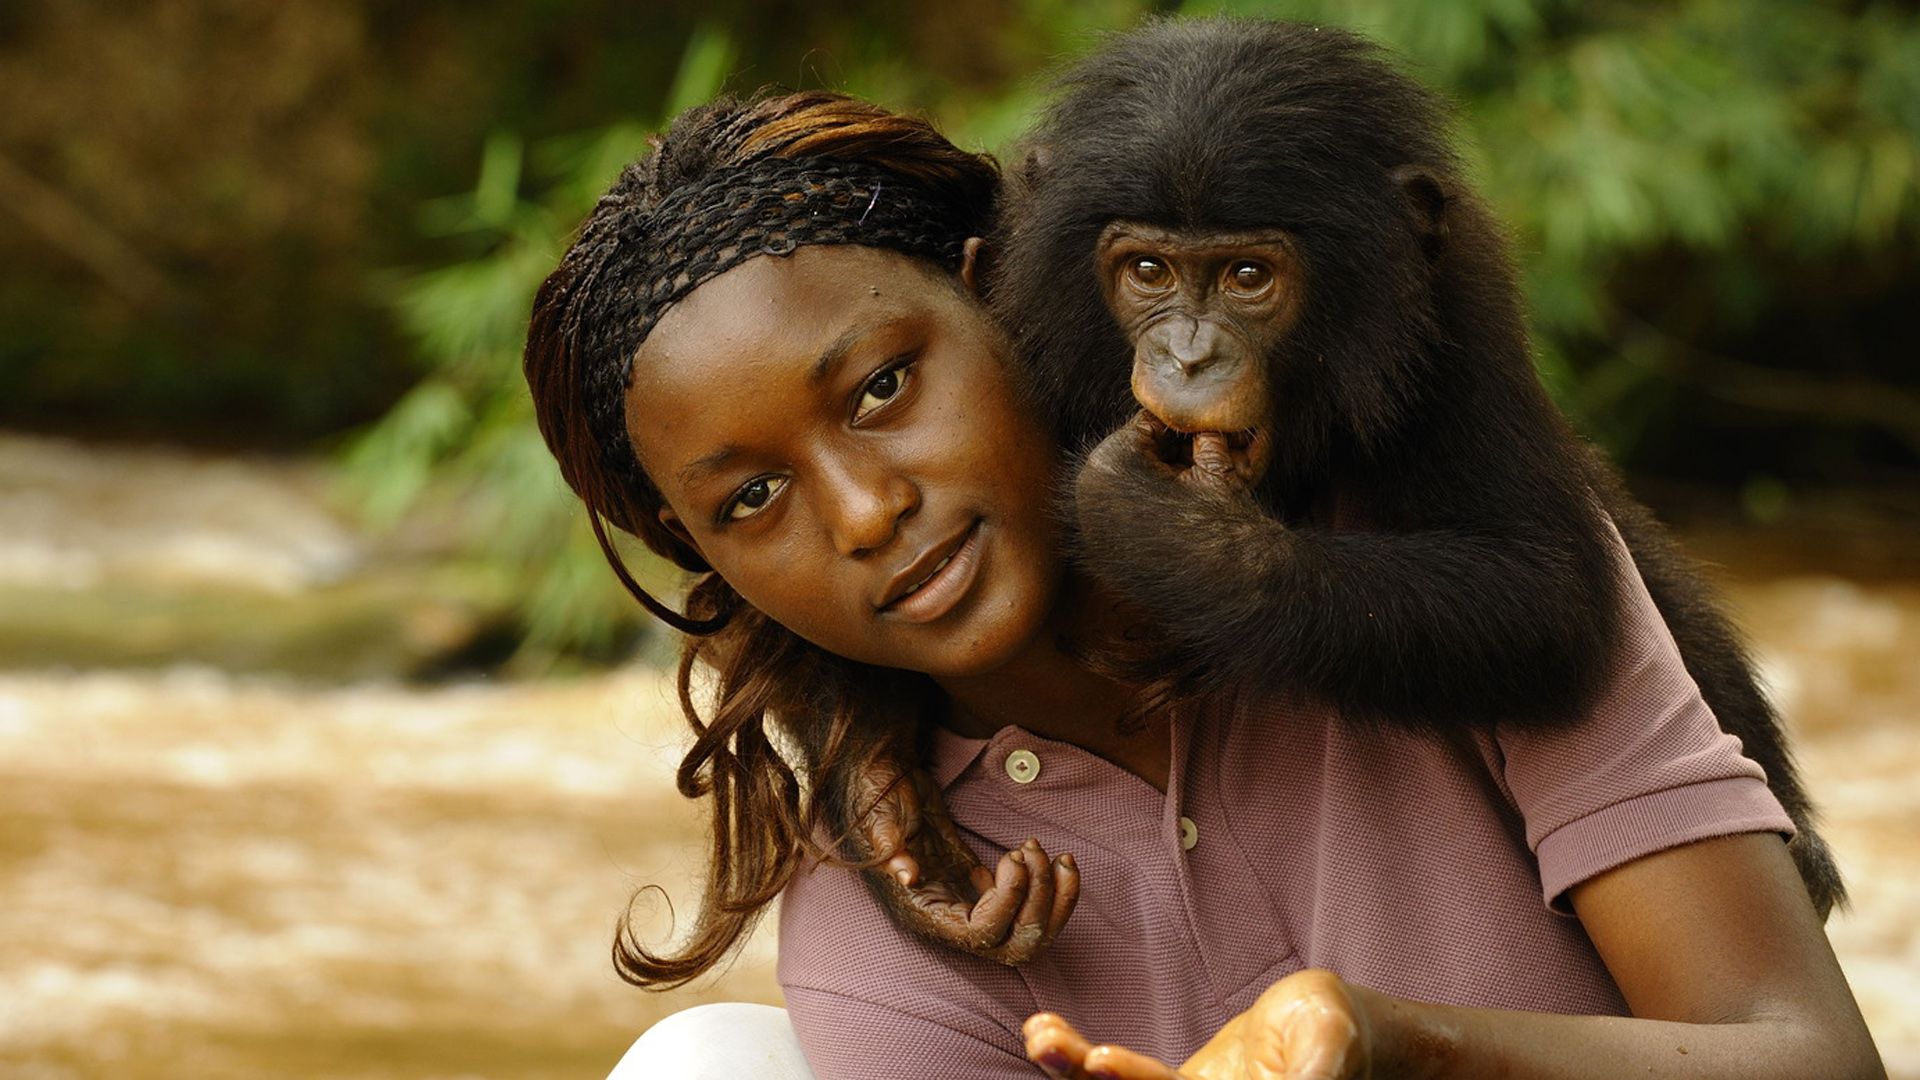 Bonobos: Back to the Wild background